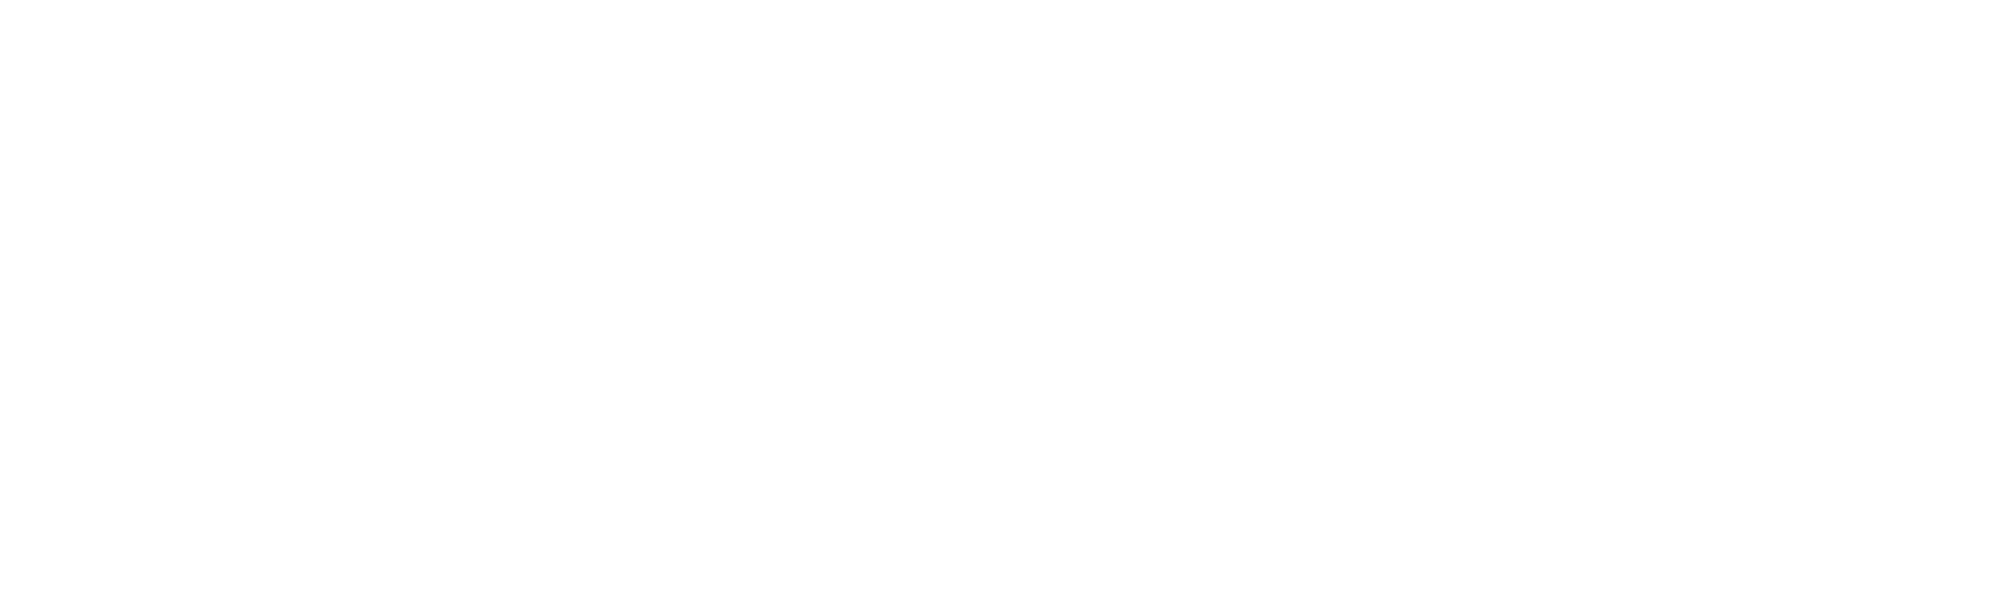 Making Plans for Lena